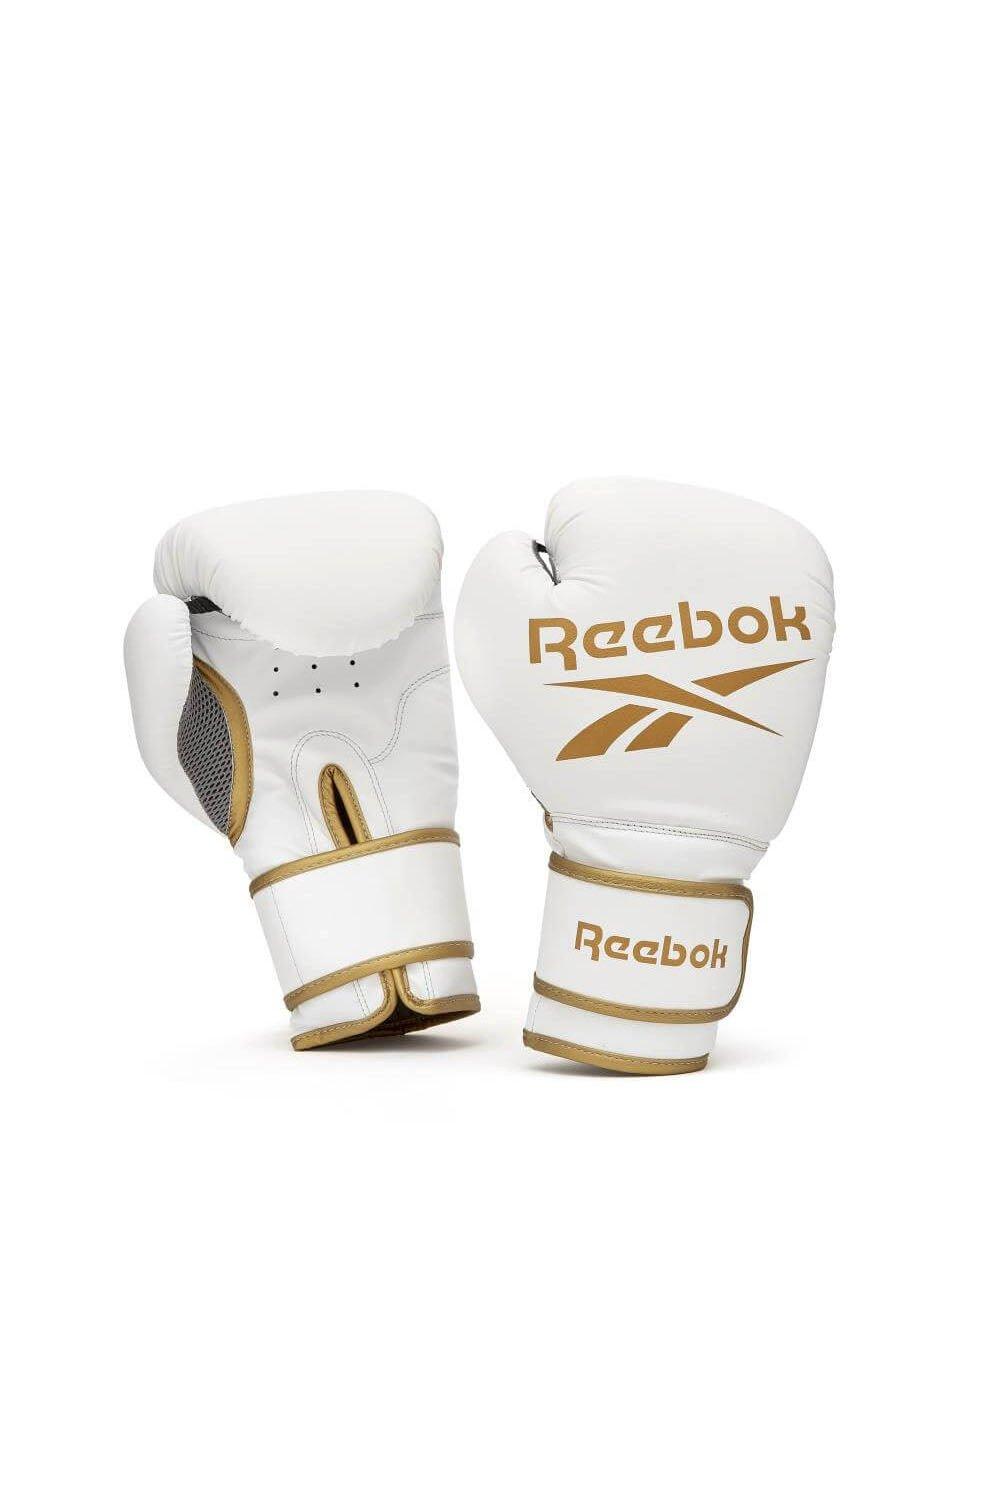 Reebok Boxing Gloves - Gold/White|Size: 14oz|white